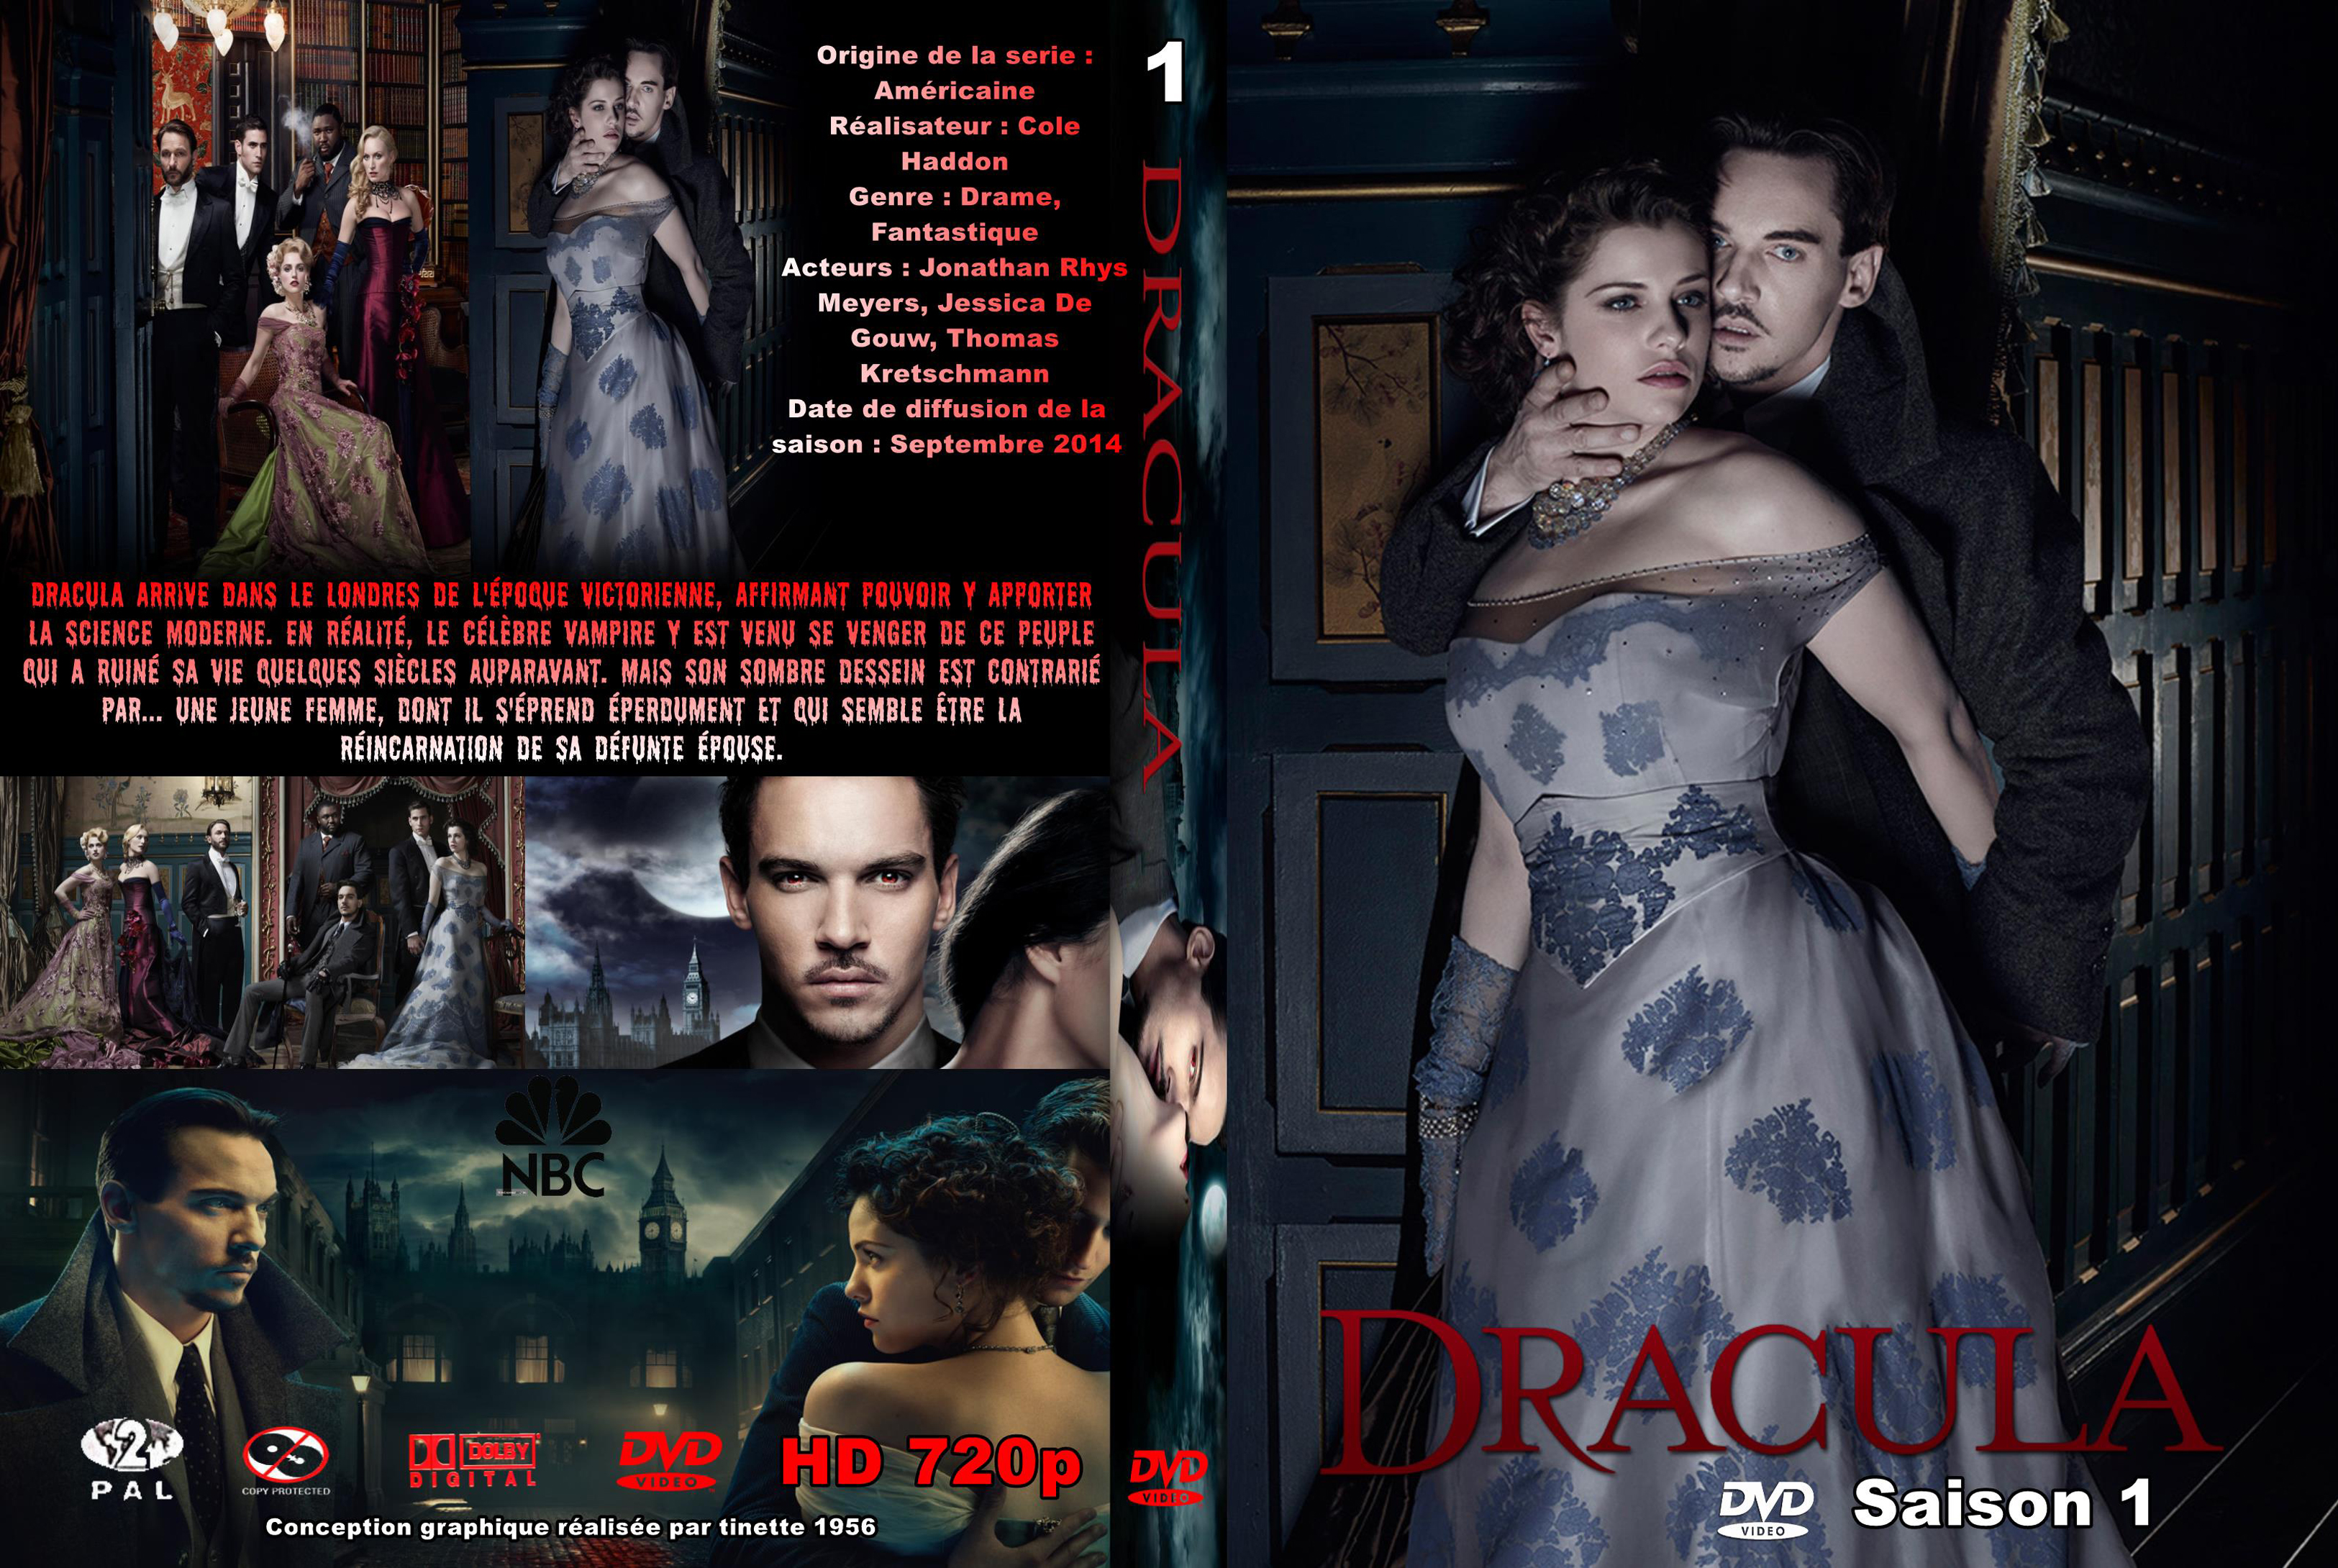 Jaquette DVD Dracula saison 1 custom